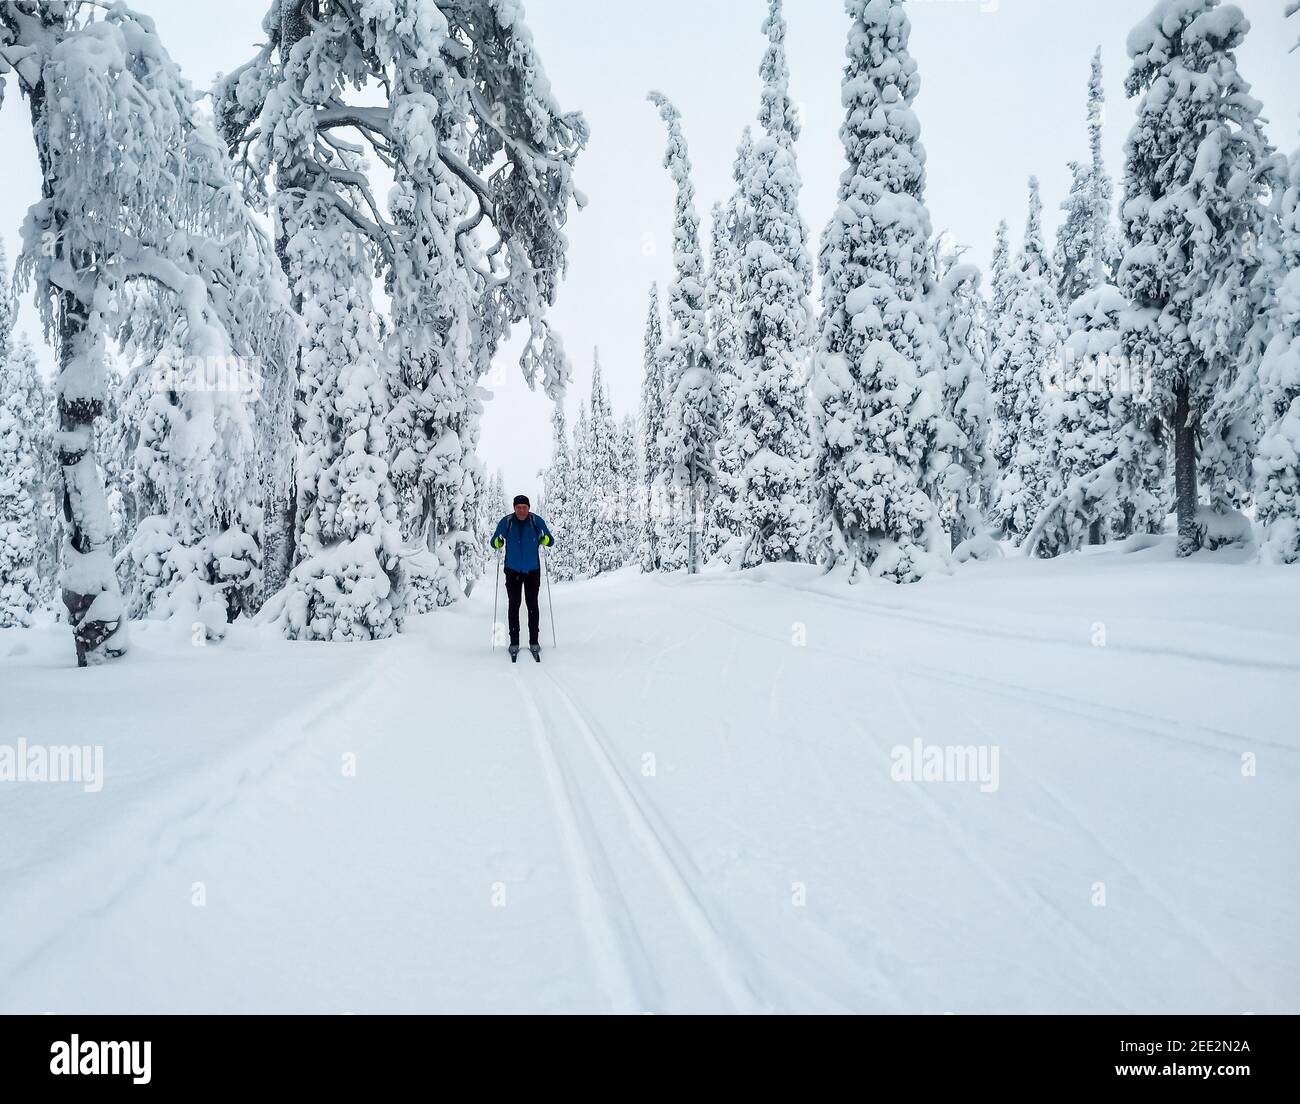 Skier in snowy landscape in Finland's Lapland Stock Photo